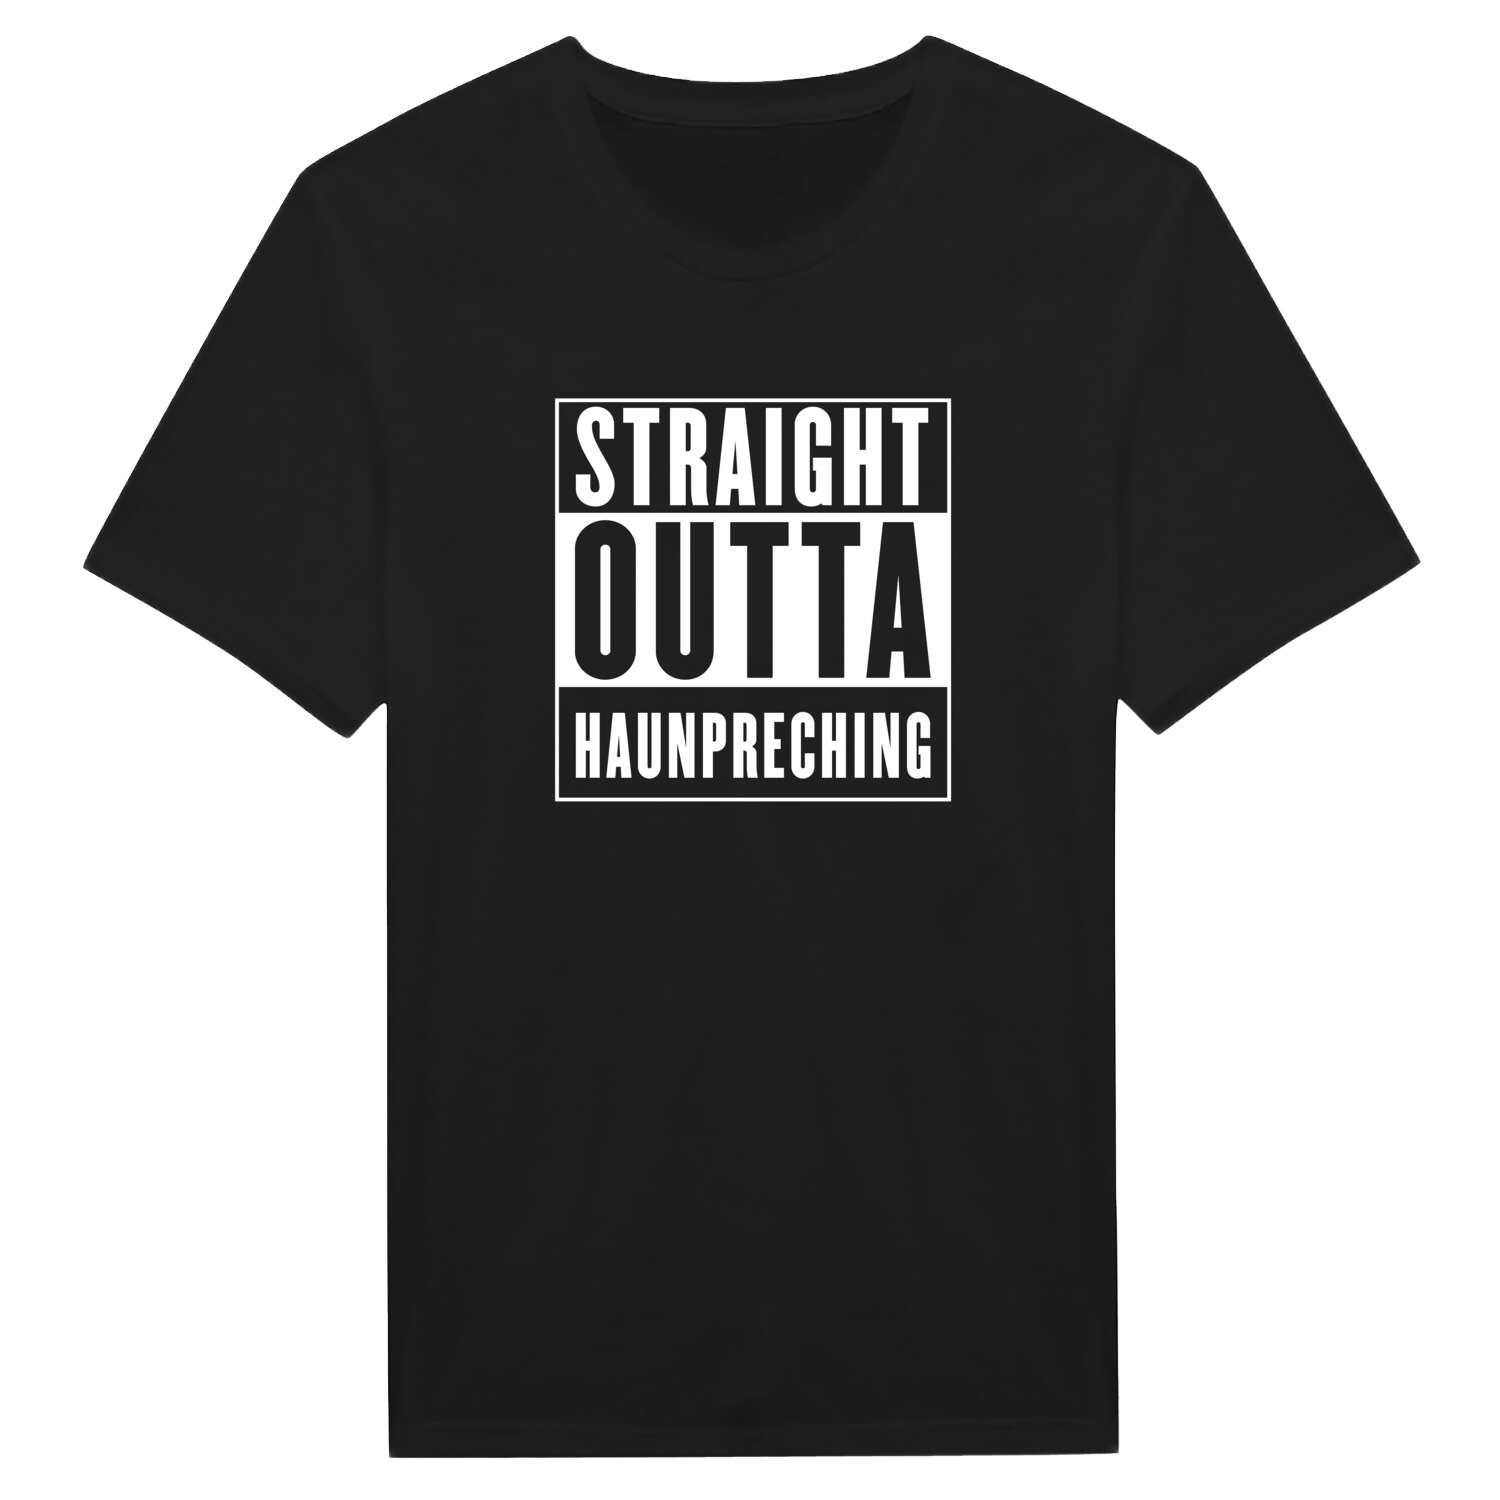 Haunpreching T-Shirt »Straight Outta«